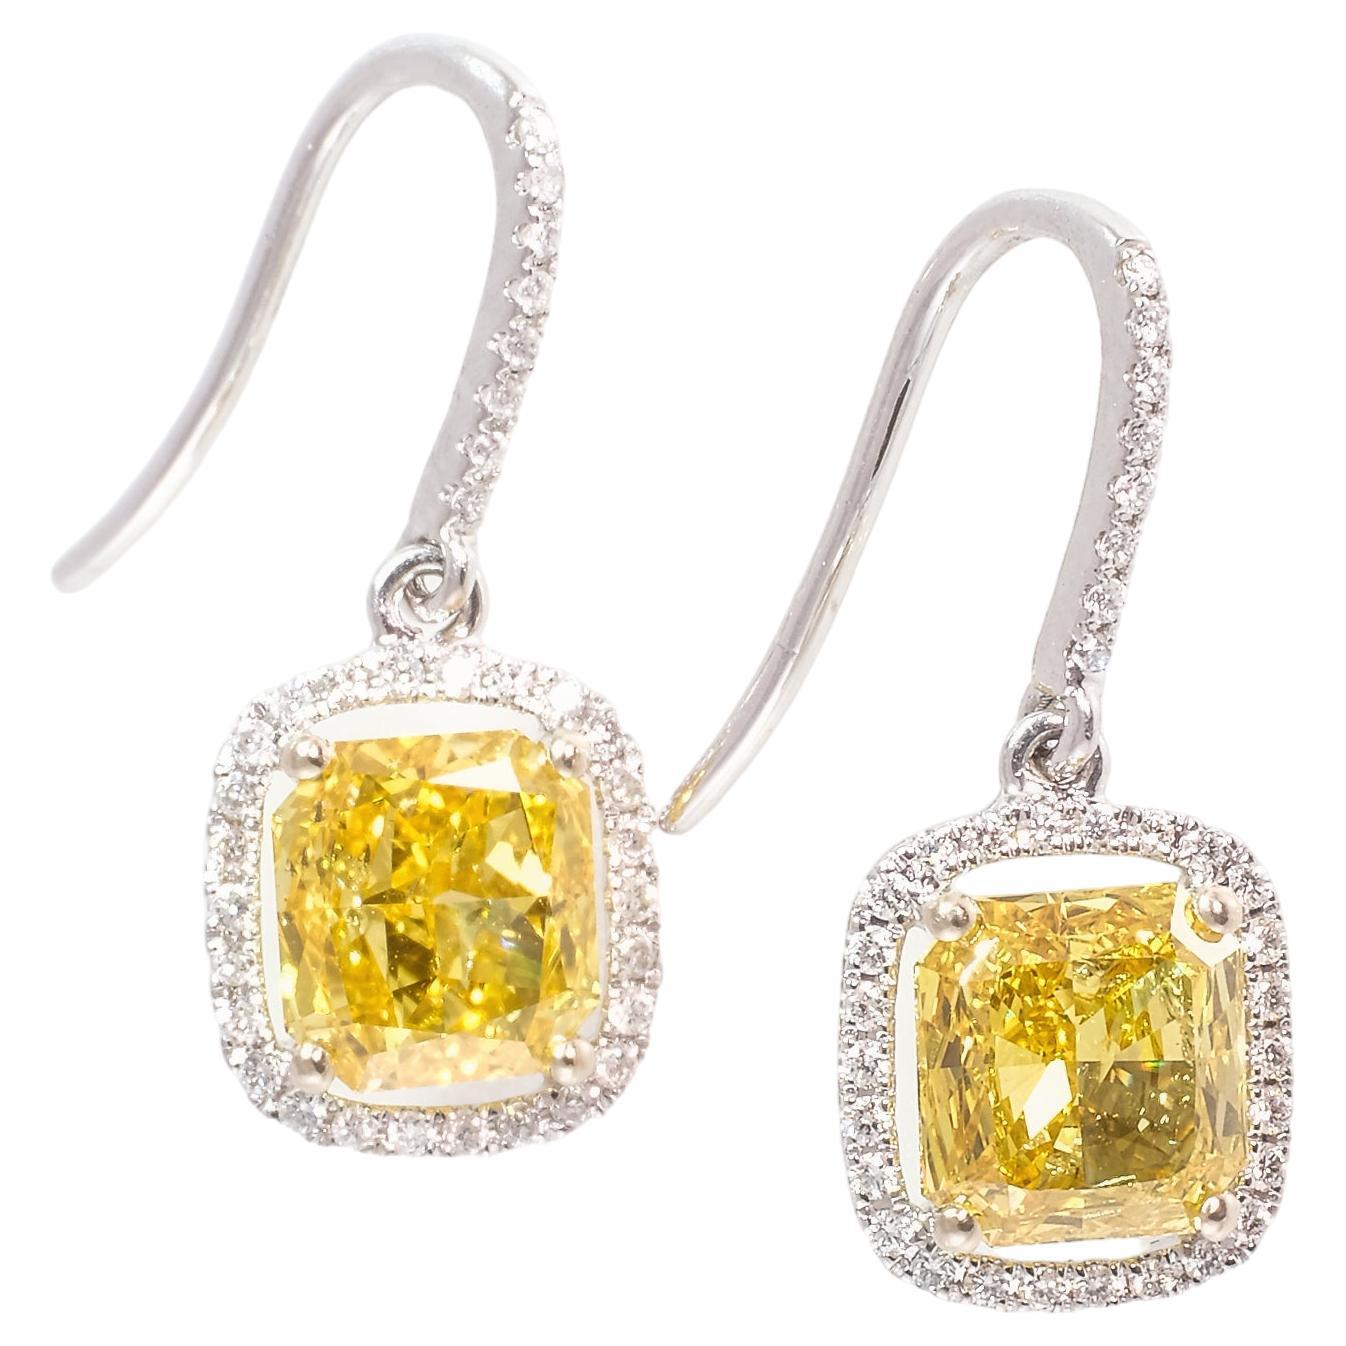 2.04 Carat Fancy Vivid Yellow Diamond Drop Earrings GIA